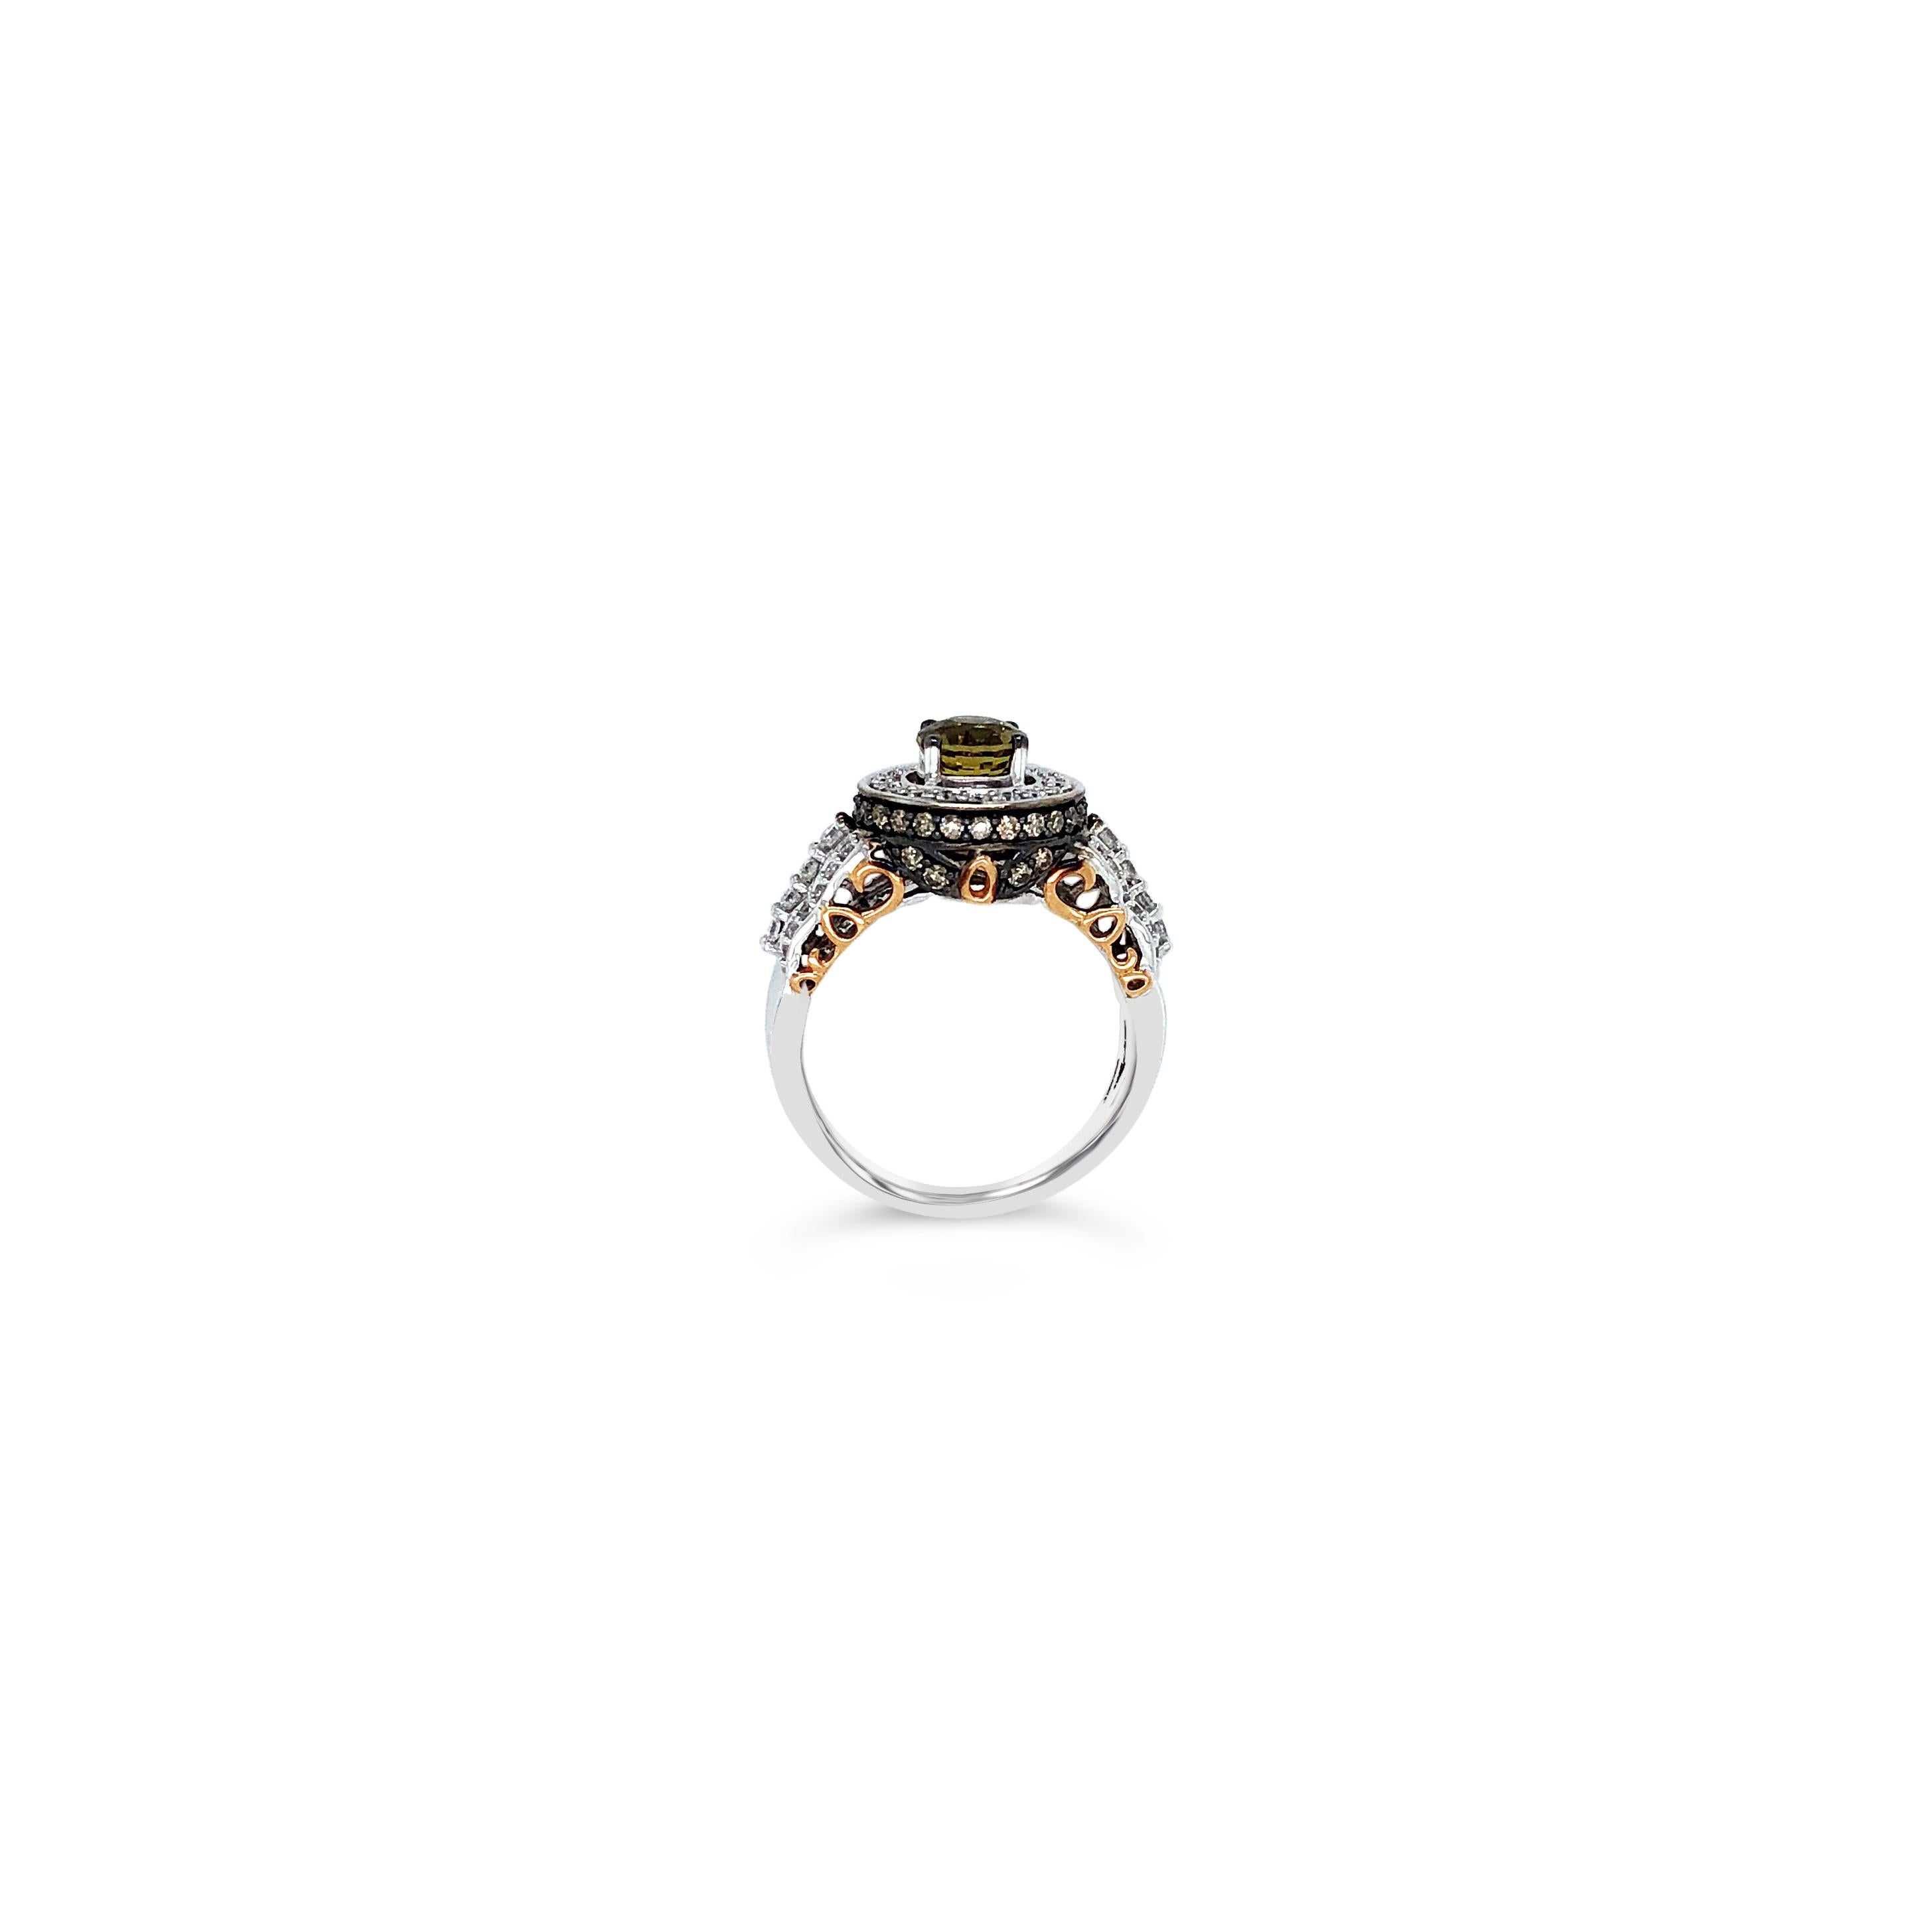 levian yellow sapphire ring